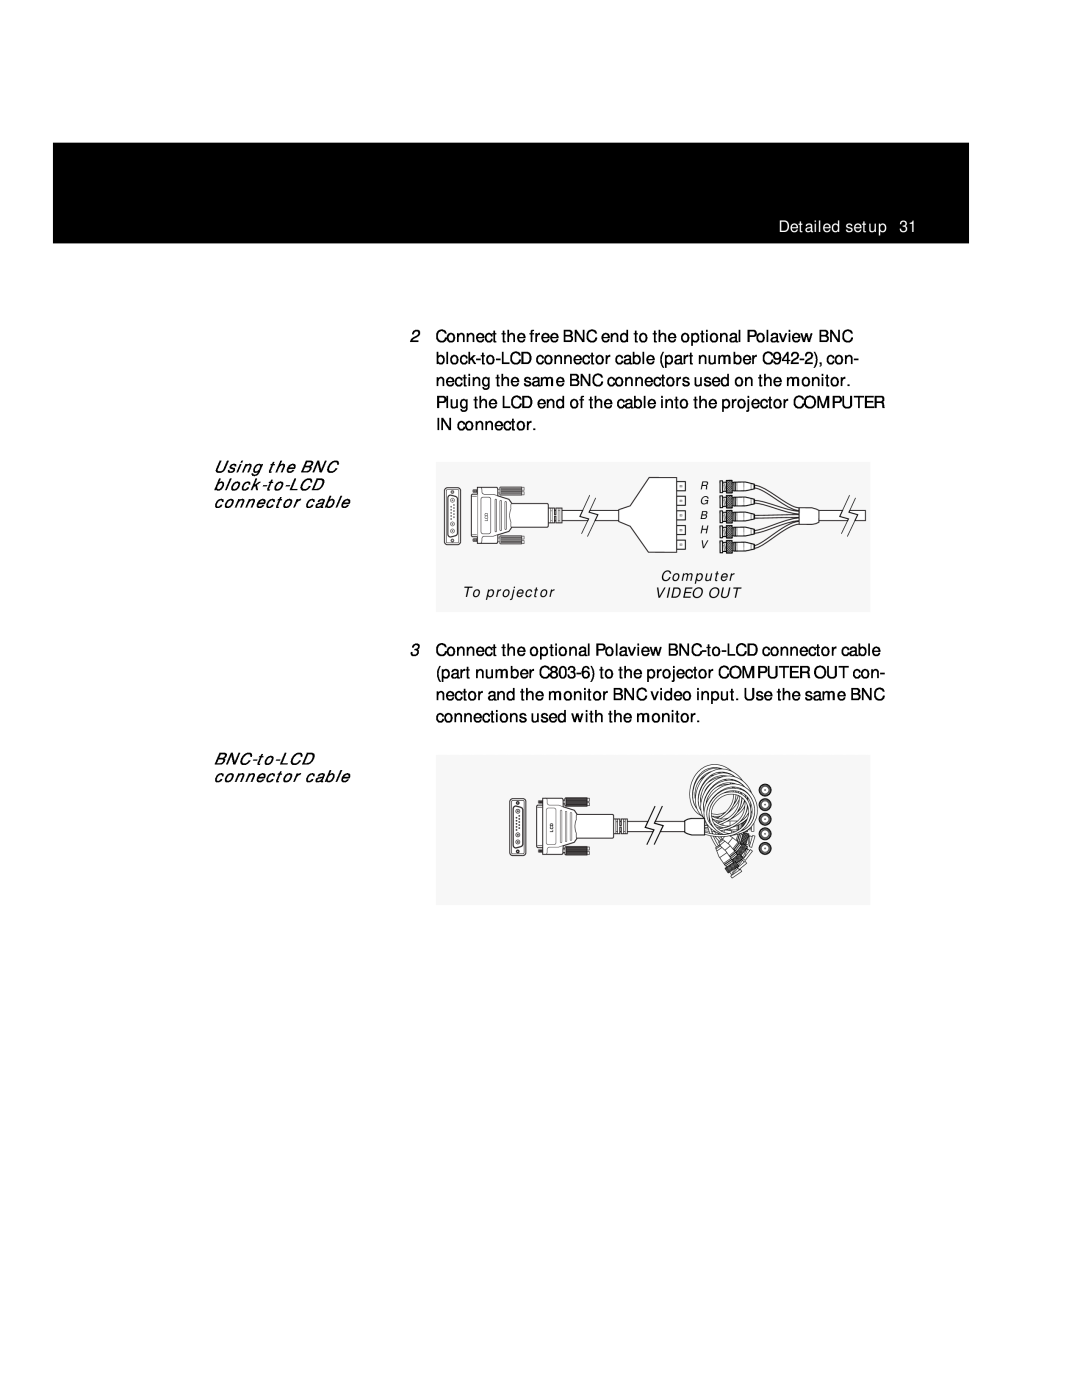 Polaroid Polaview 305 manual Using the BNC block-to-LCD connector cable, BNC-to-LCD connector cable, To projector 